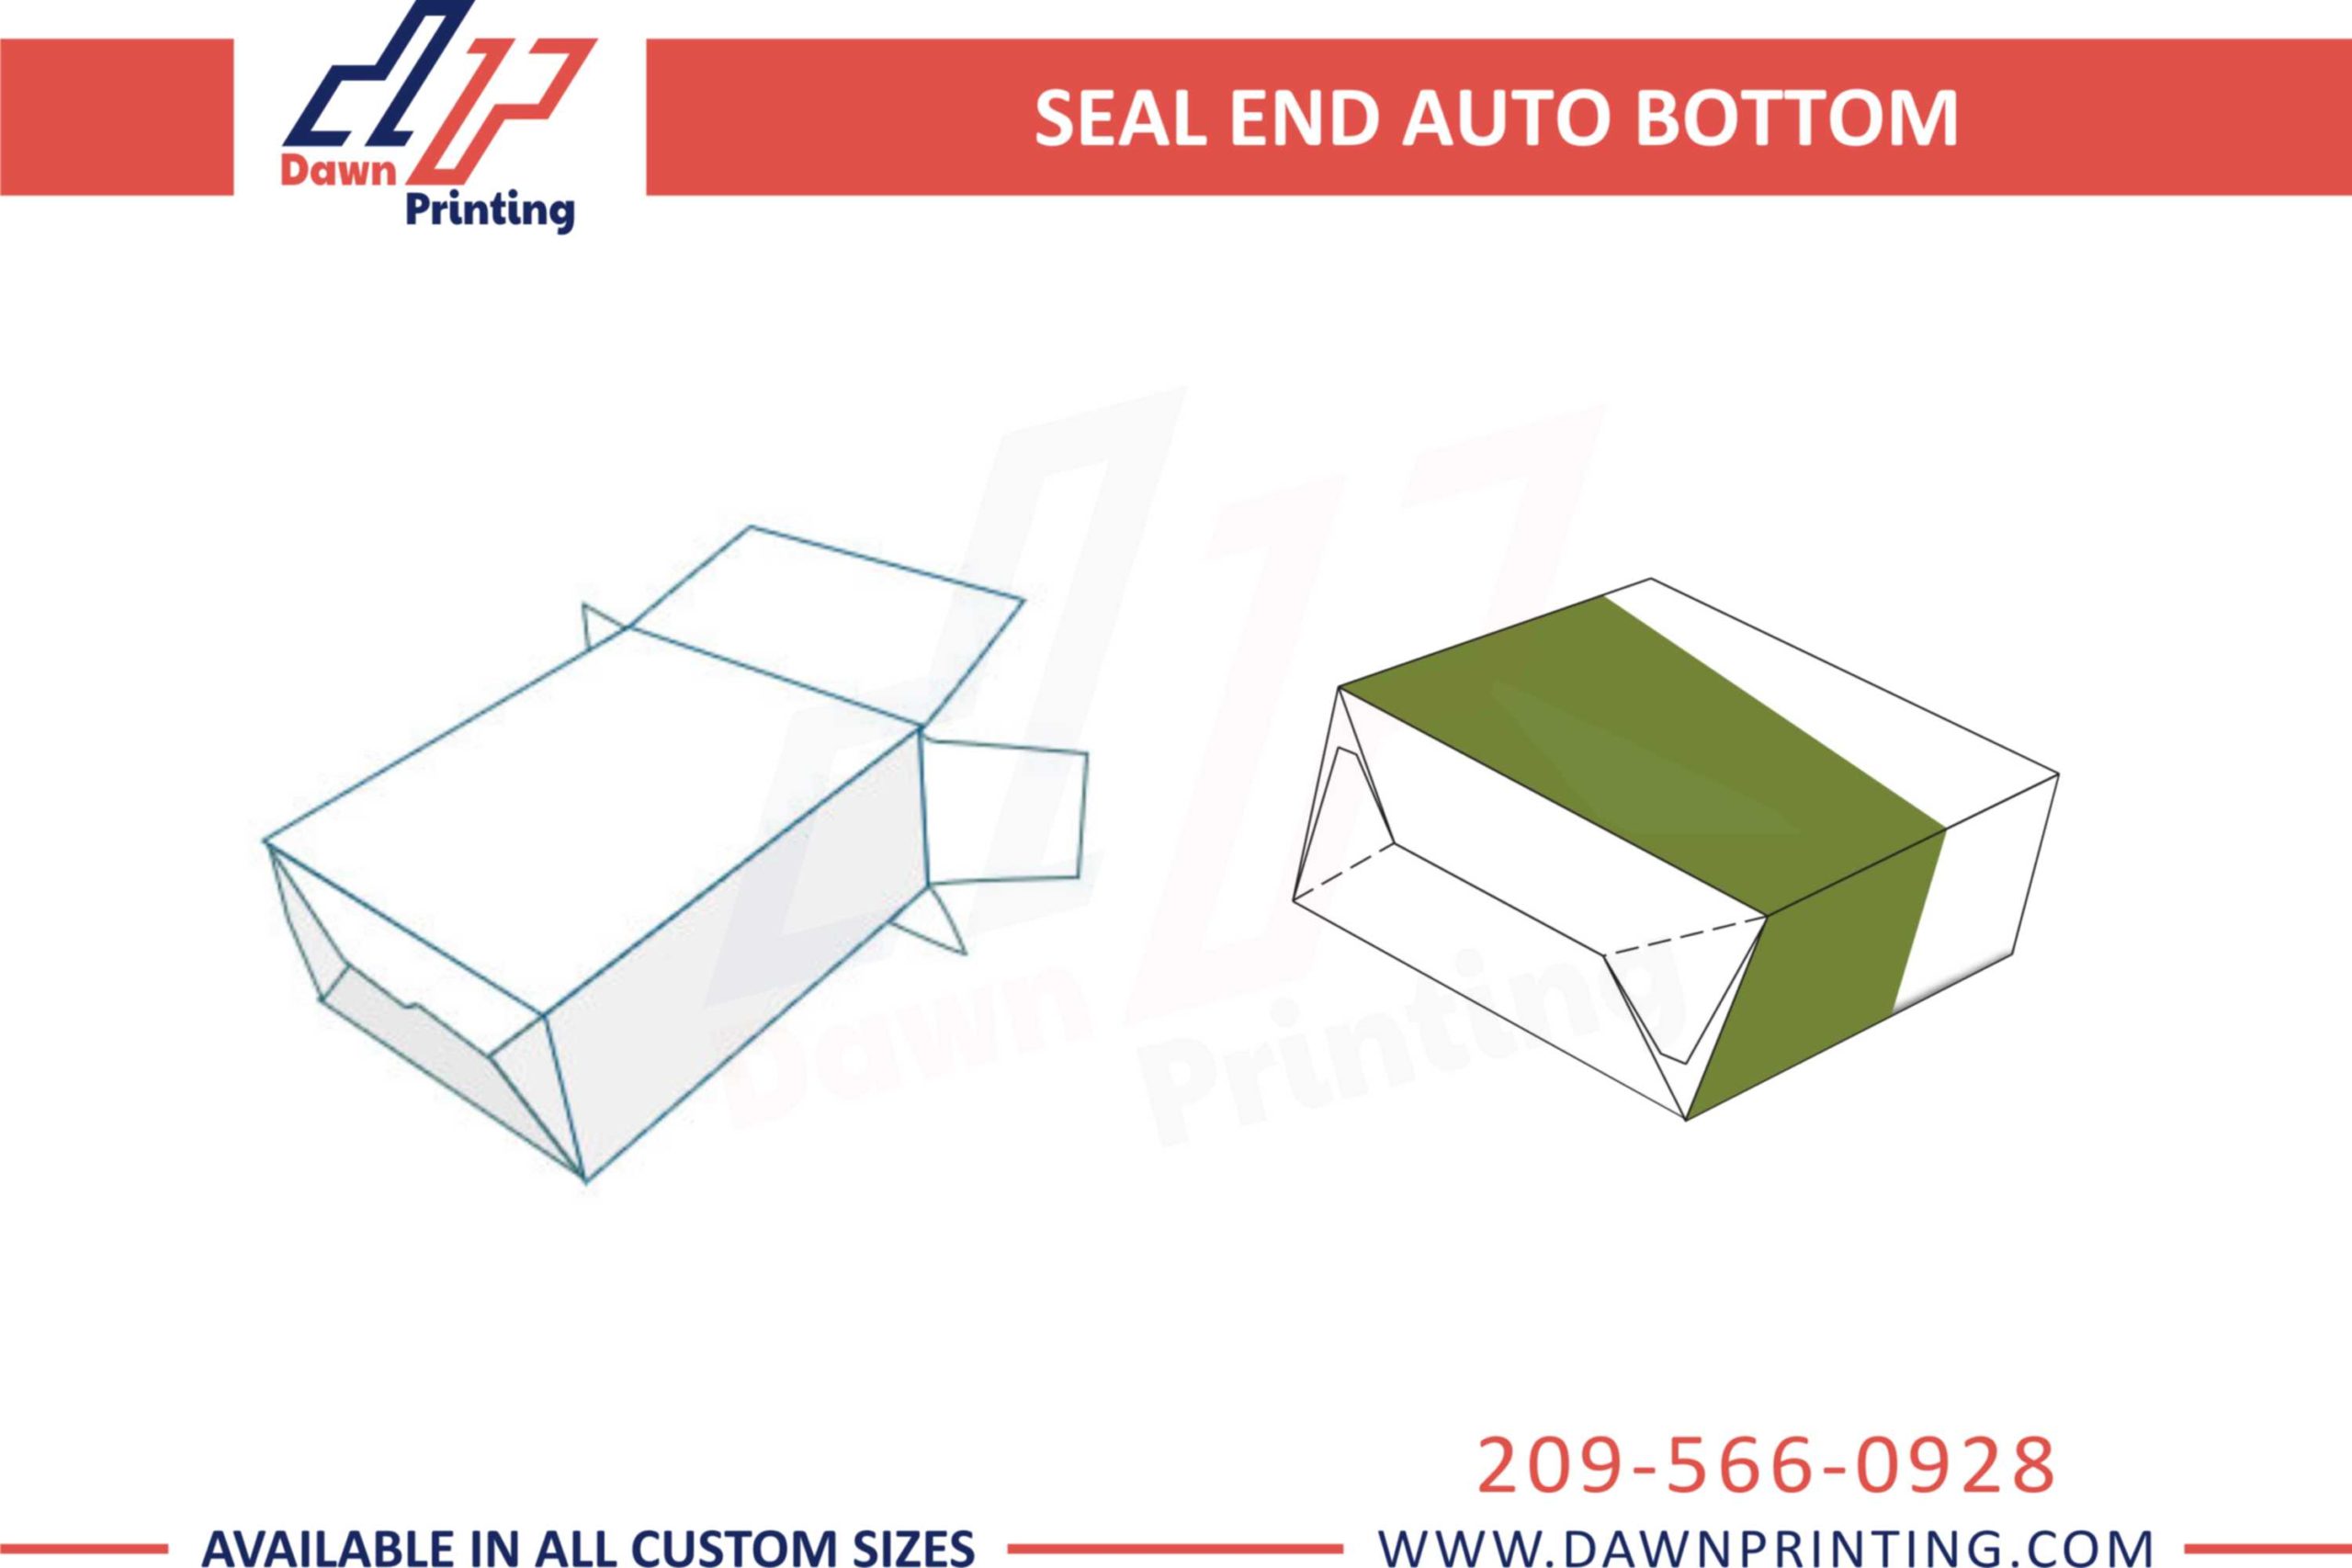 Dawn Printing - Custom Seal End Auto Bottom Boxes